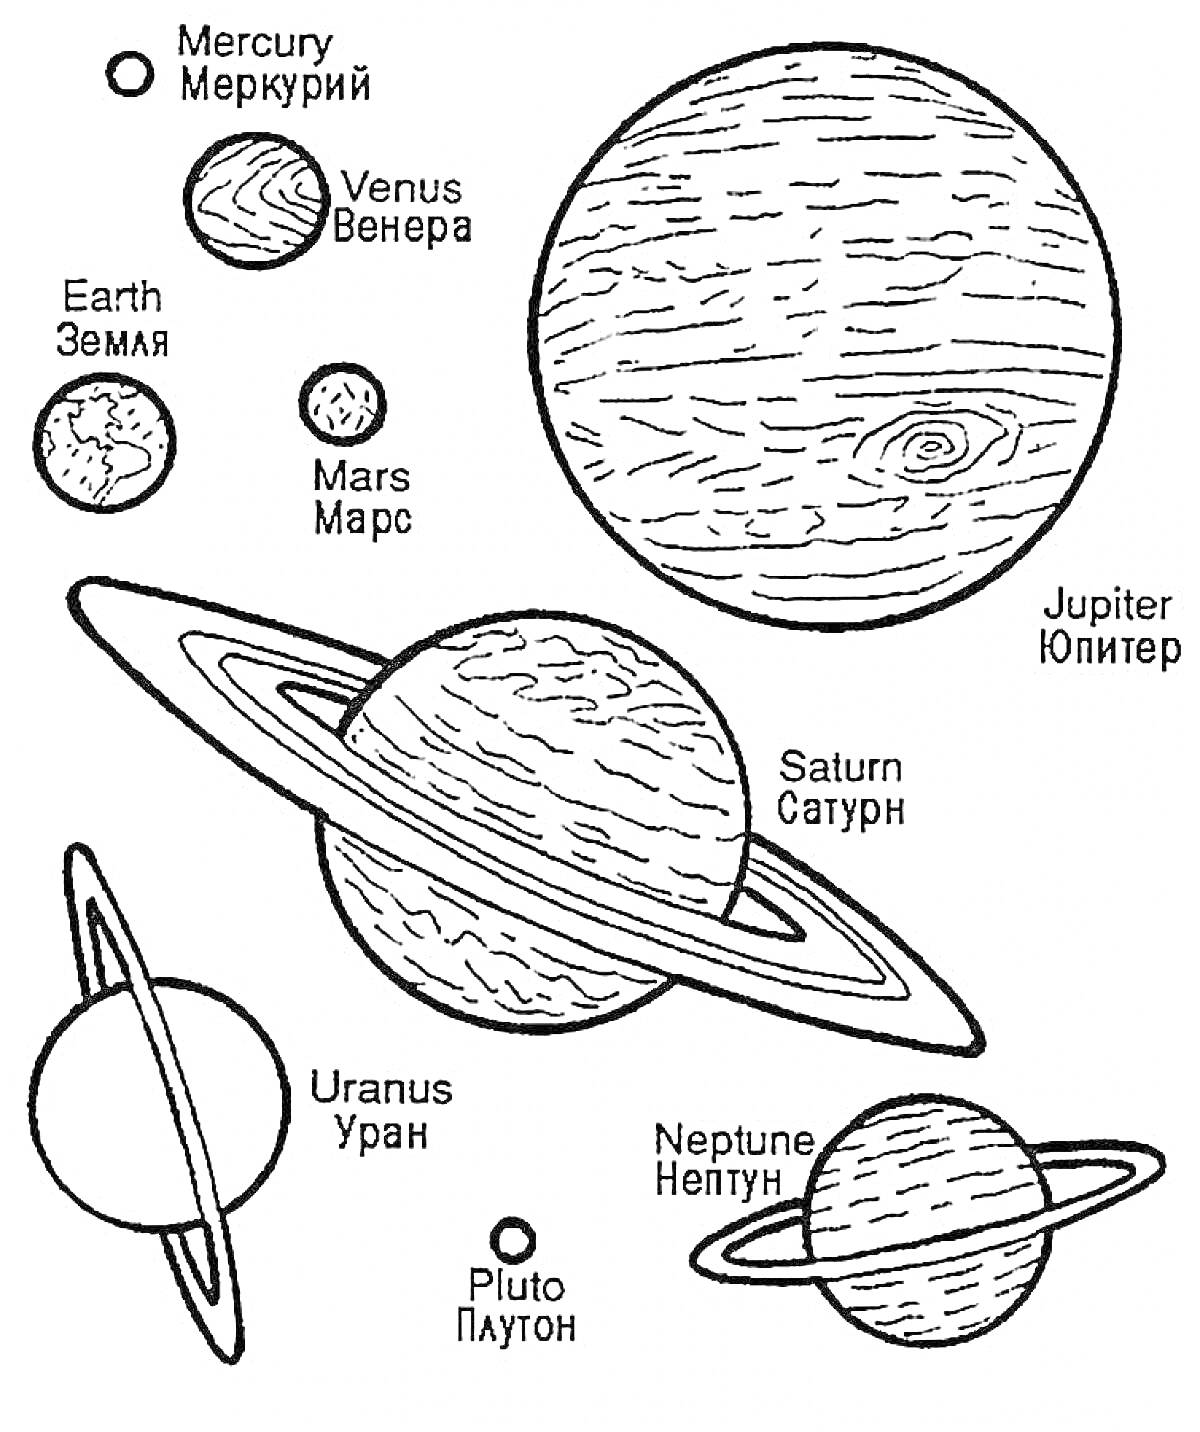 Раскраска Планеты солнечной системы - Меркурий, Венера, Земля, Марс, Юпитер, Сатурн, Уран, Нептун, Плутон